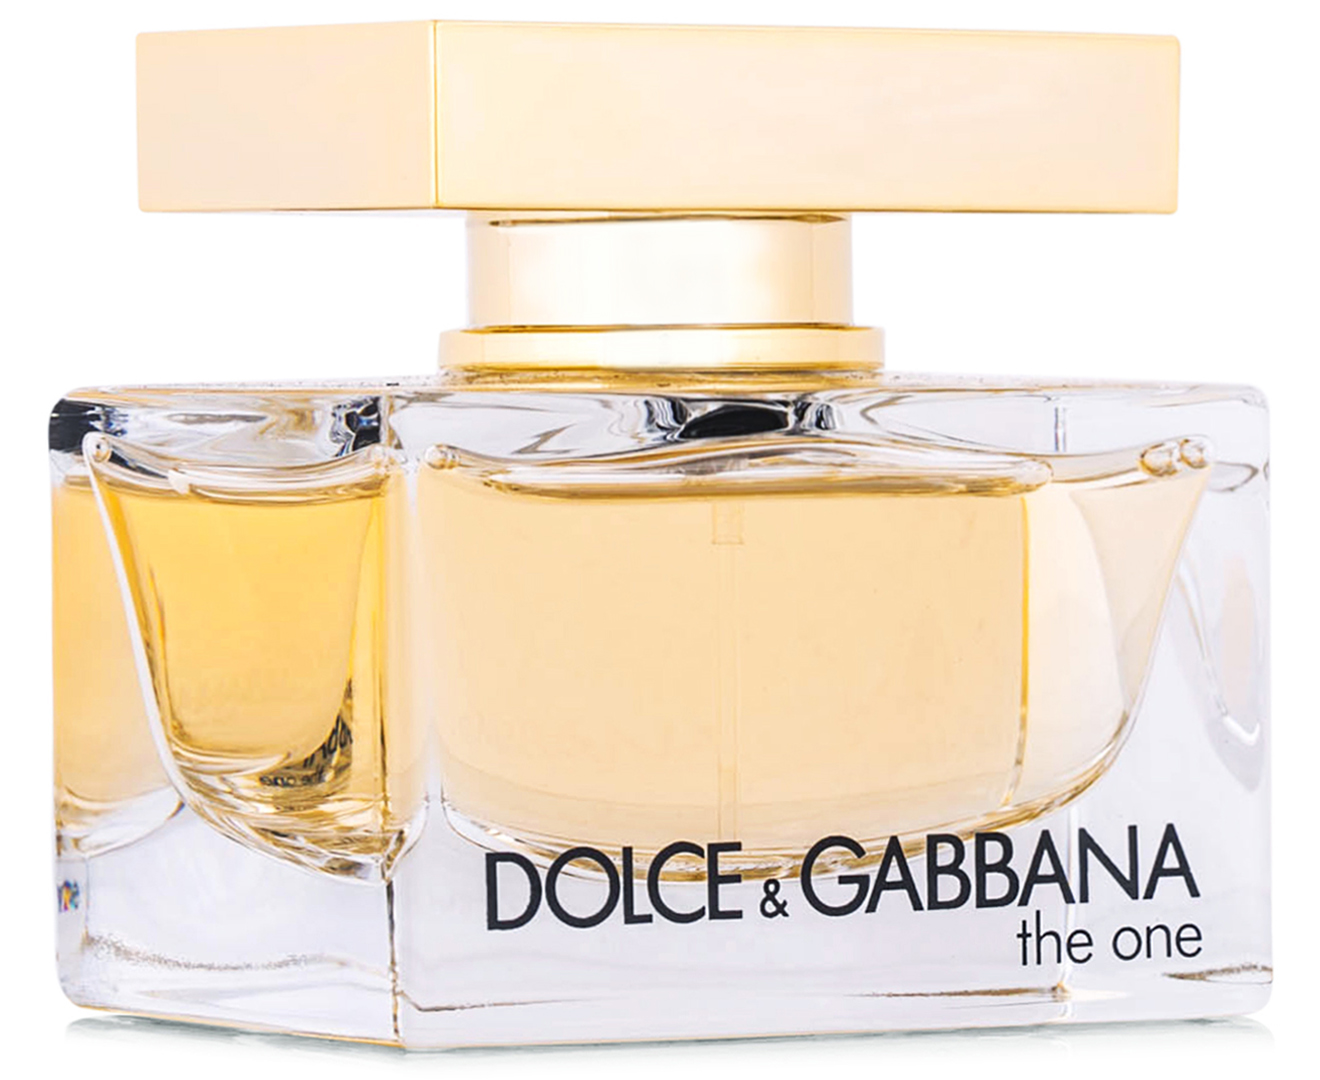 Купить дольче габбана ван. Dolce & Gabbana the one women EDP, 75 ml. Dolce & Gabbana the one for women EDP 50 ml. Dolce Gabbana the one женские 75 мл. Dolce Gabbana the one женские 50 ml.